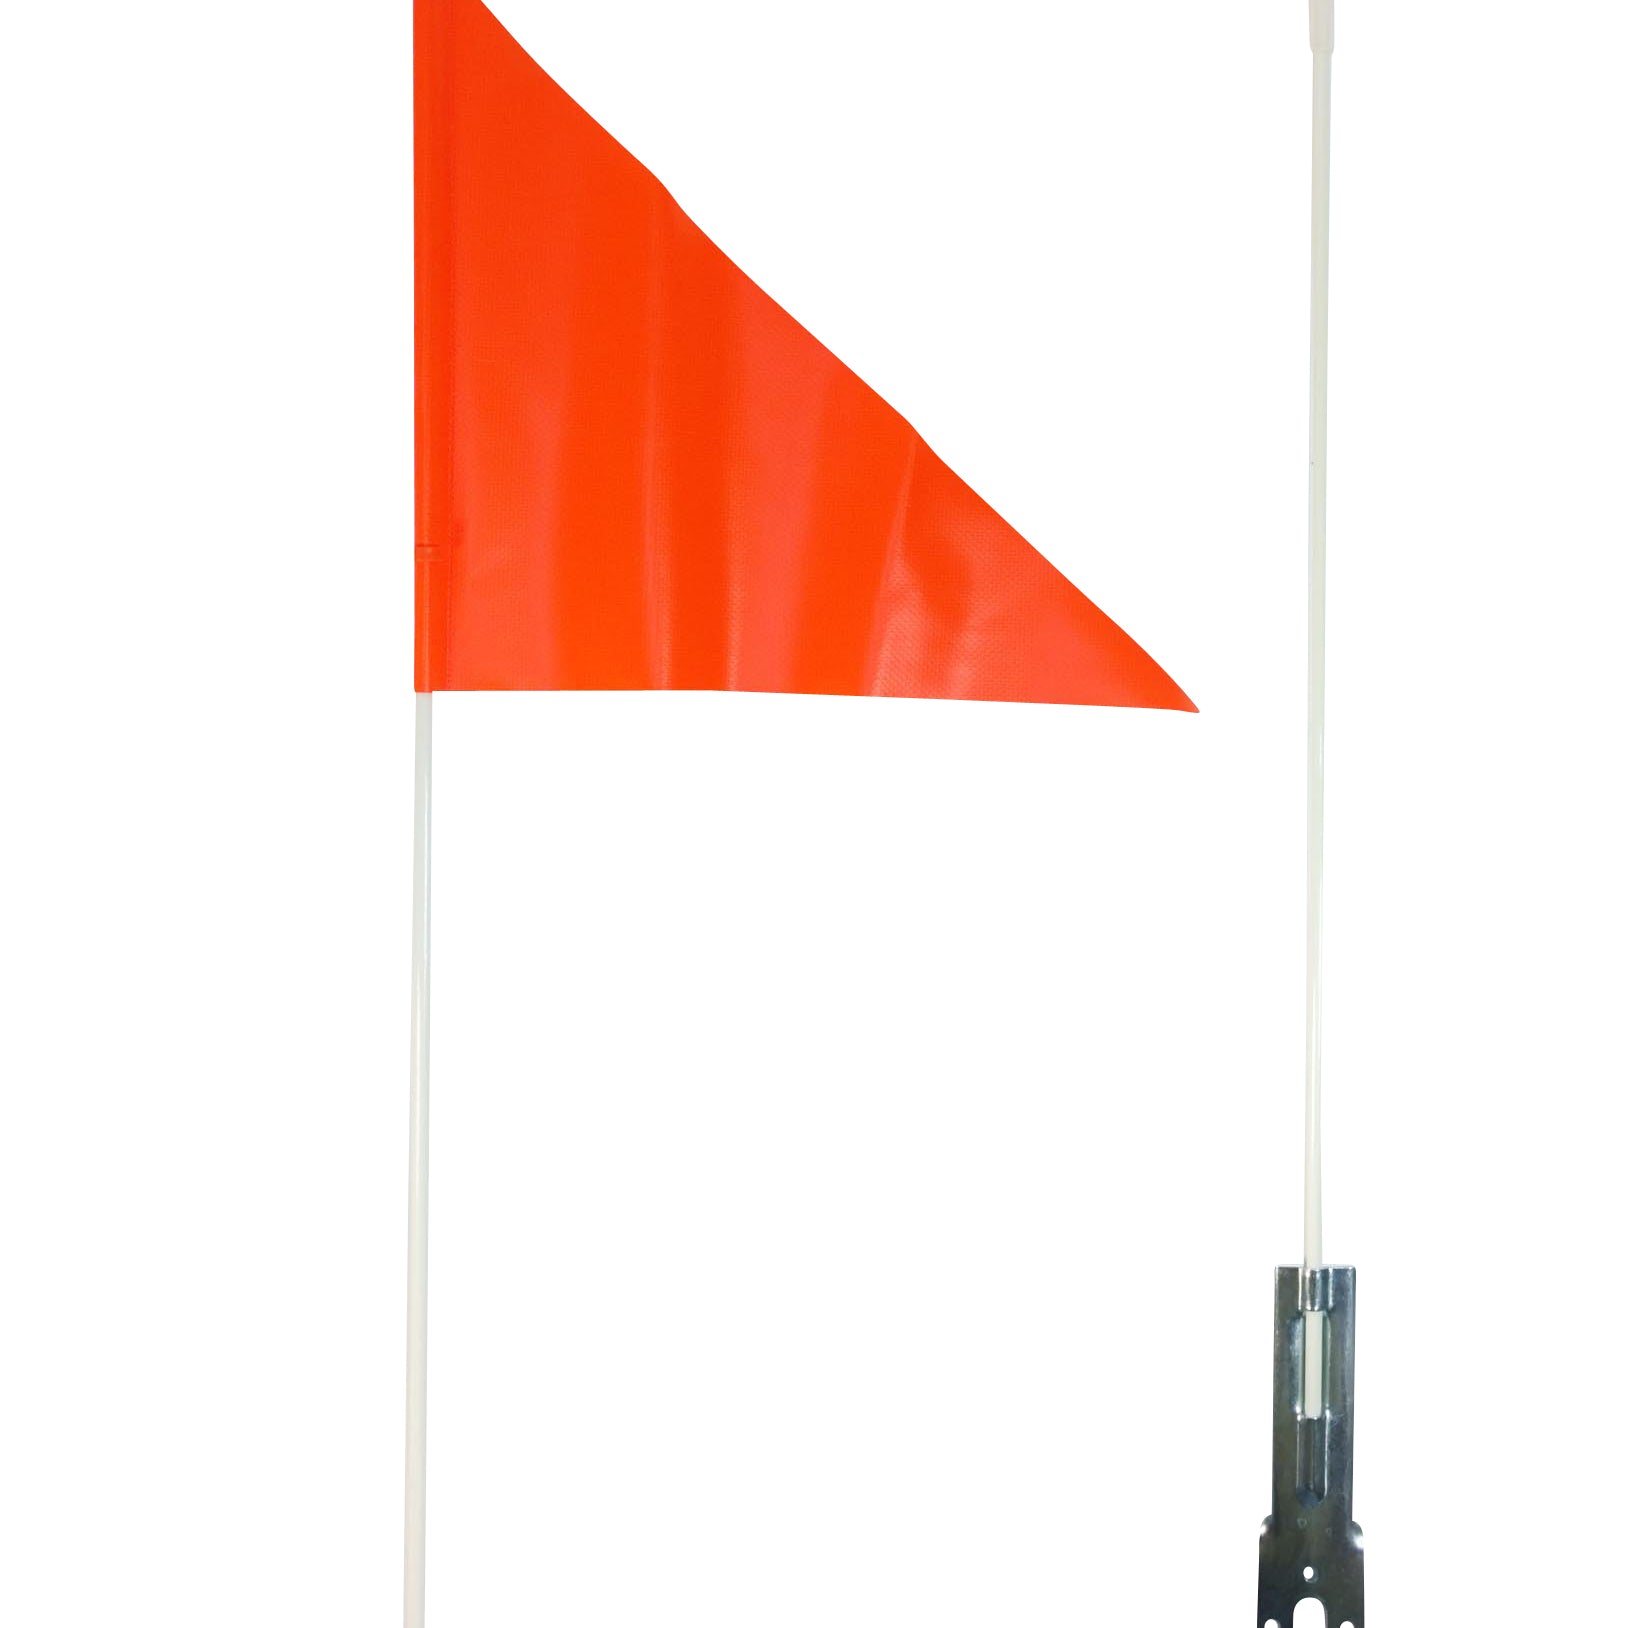 Fahrradwimpel  Sicherheitswimpel Fahrrad Fahne Flagge Fähnchen Verdrehschutz orange Wimpel